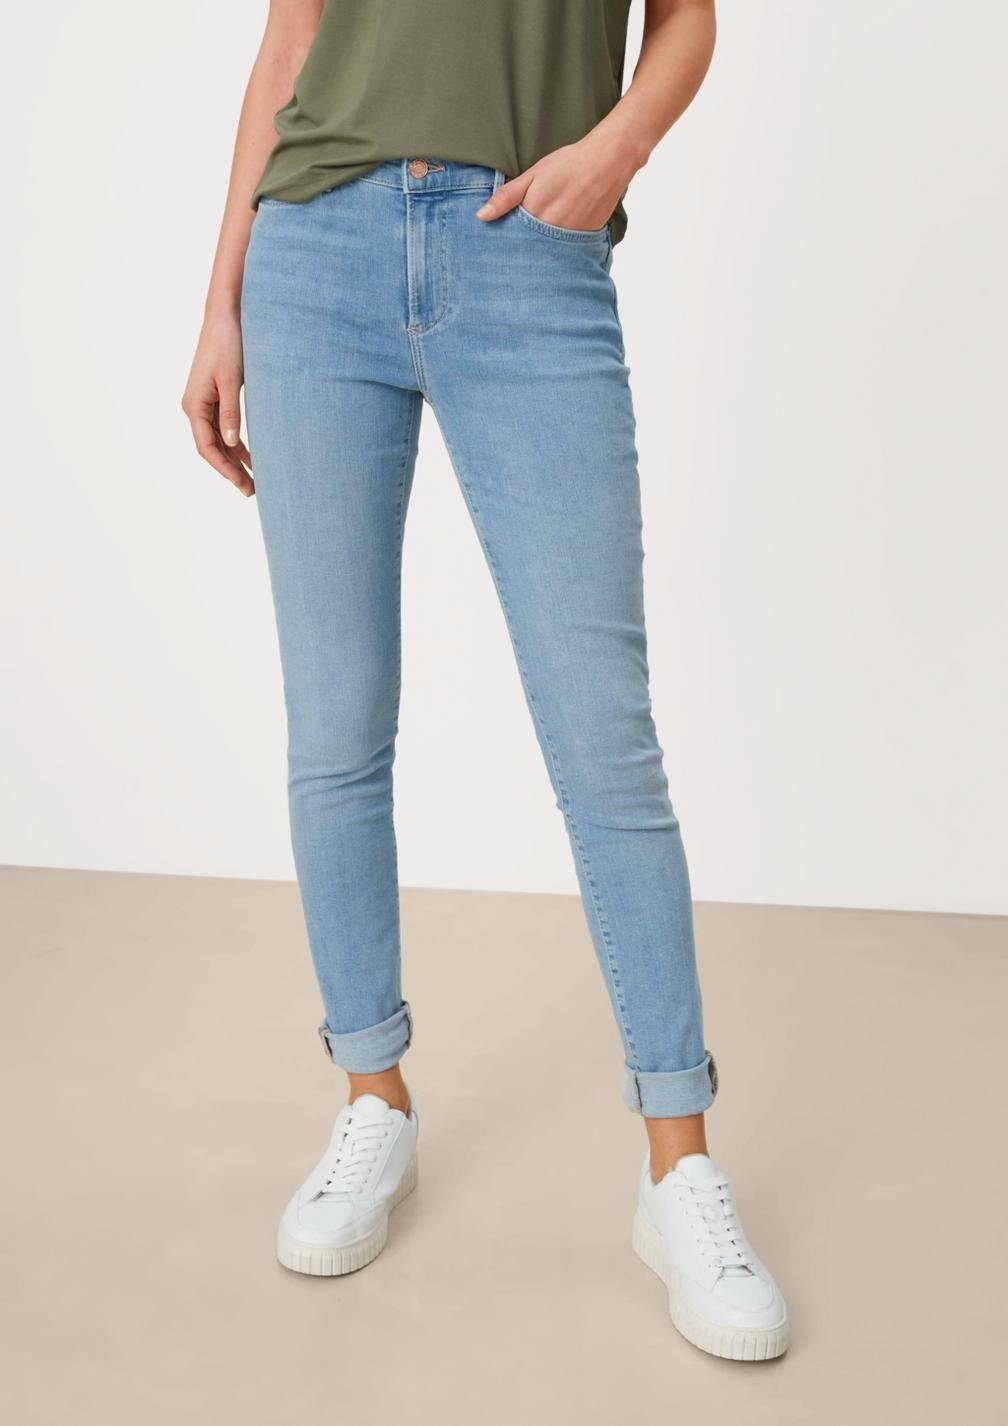 s.Oliver Skinny-fit-Jeans IZABELL Skinny Fit, Mid rise, Skinny-Leg-Form 53Z4 light blue